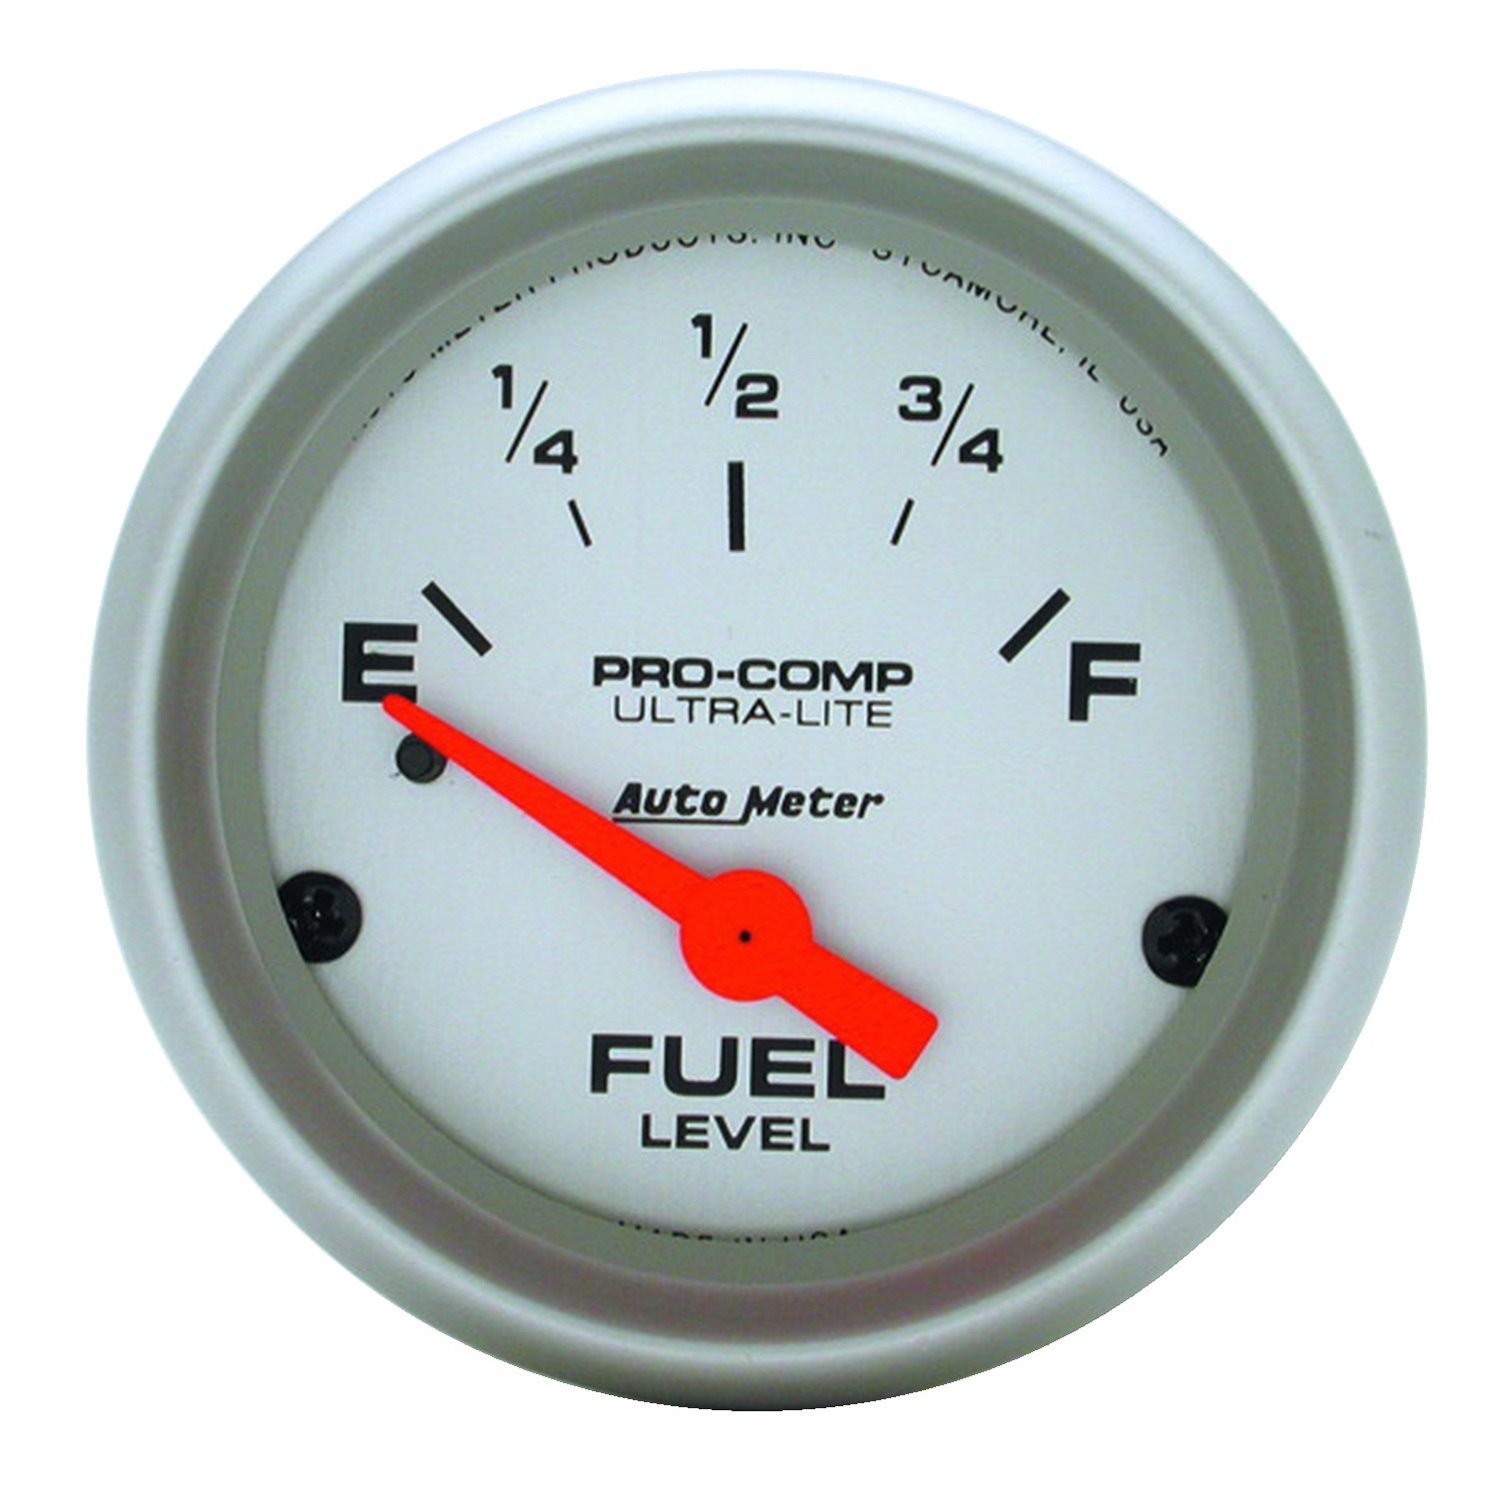 Ultra-Lite Fuel Level Gauge 2-1/16" electrical